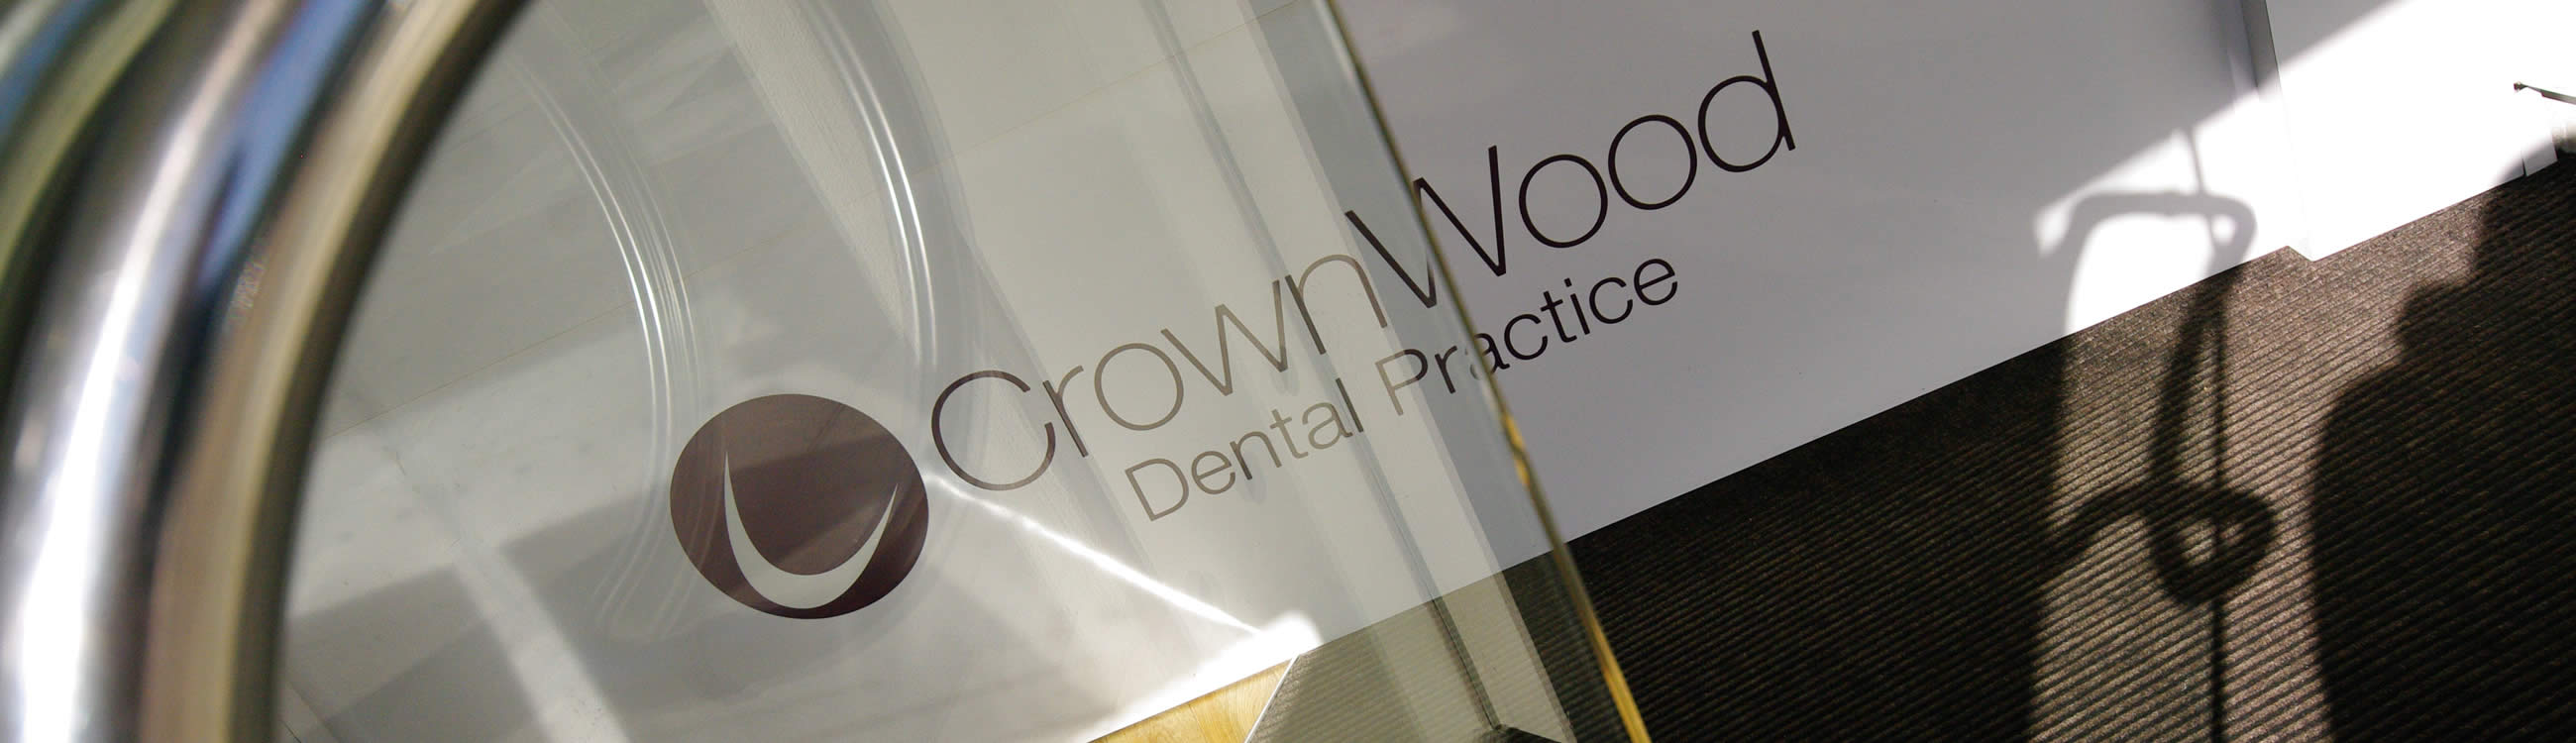 CrownWood Dental Practice in Bracknell